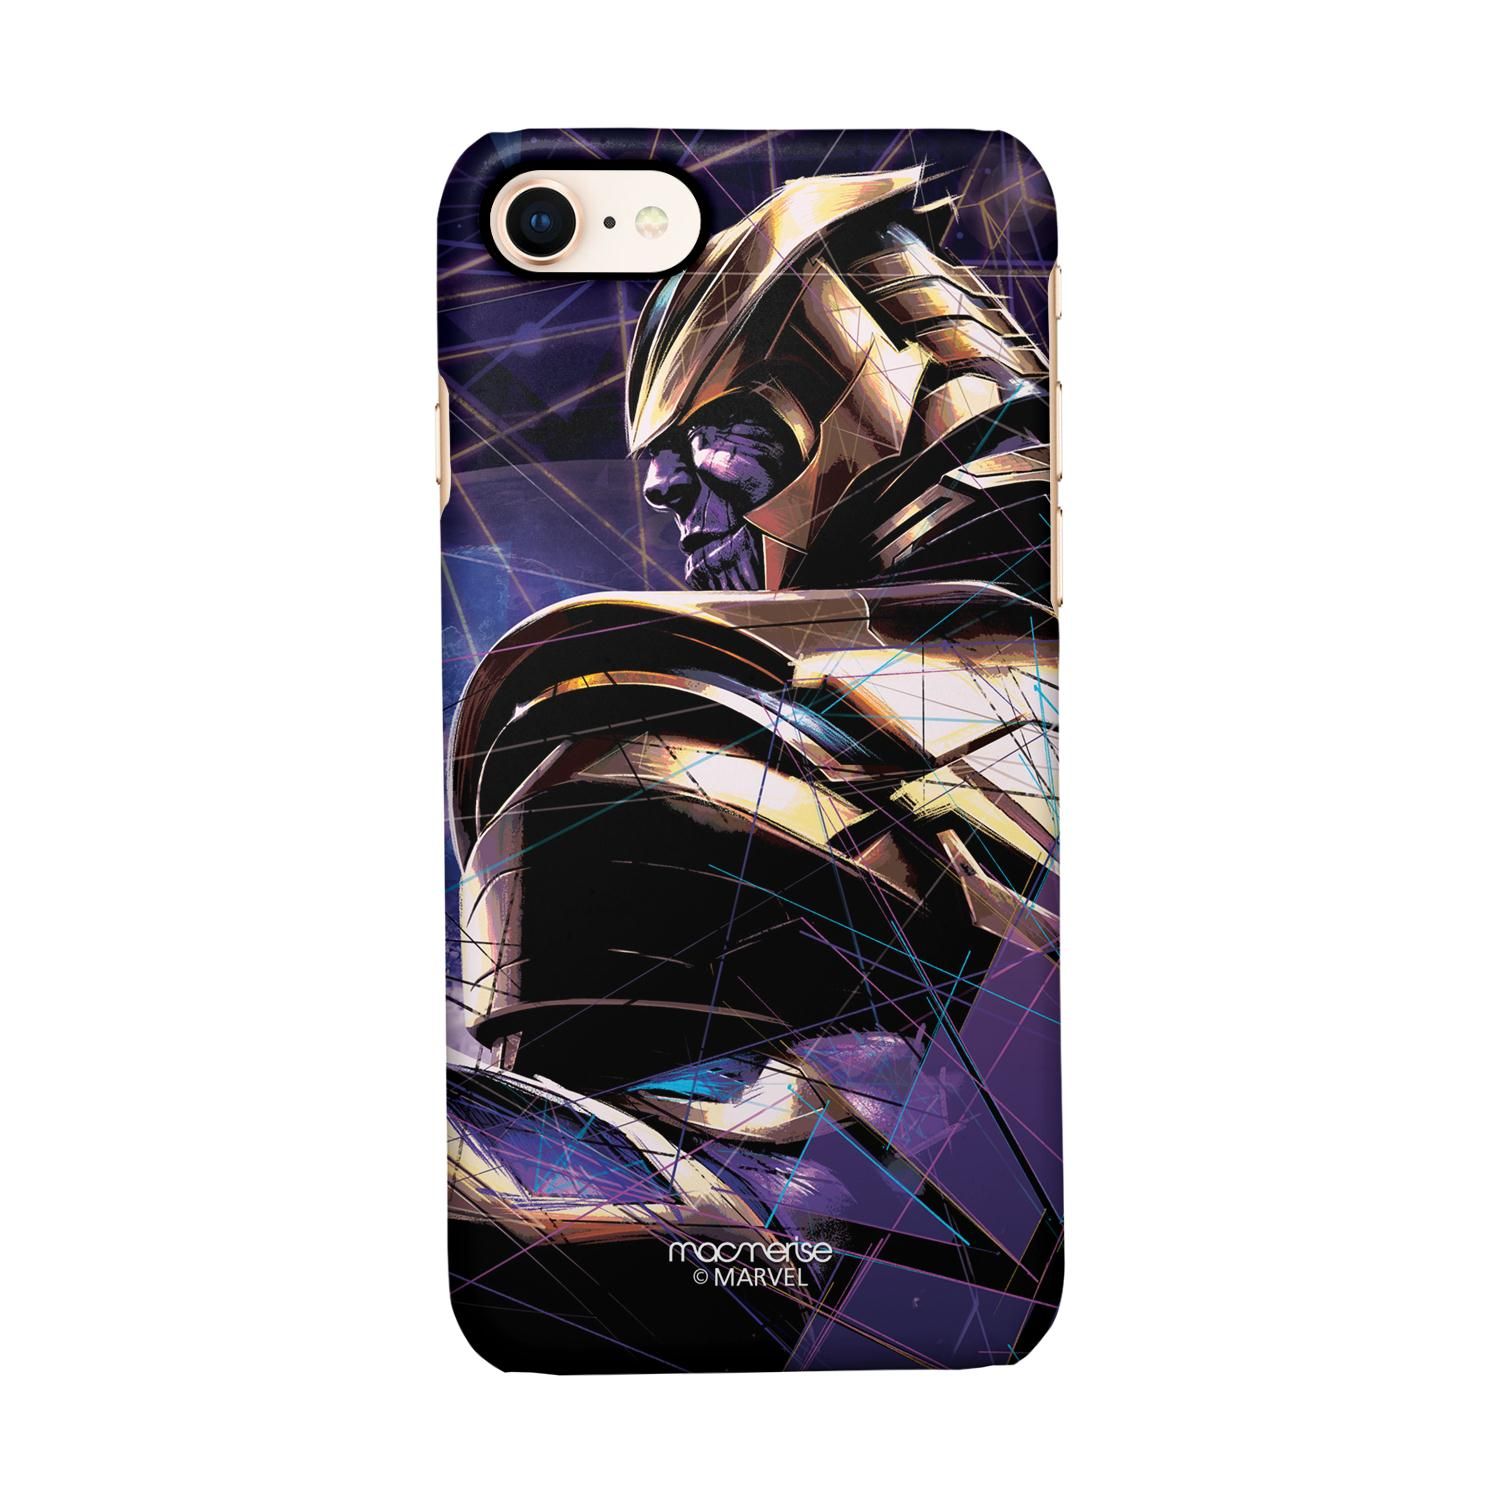 Buy Thanos on Edge - Sleek Phone Case for iPhone 7 Online